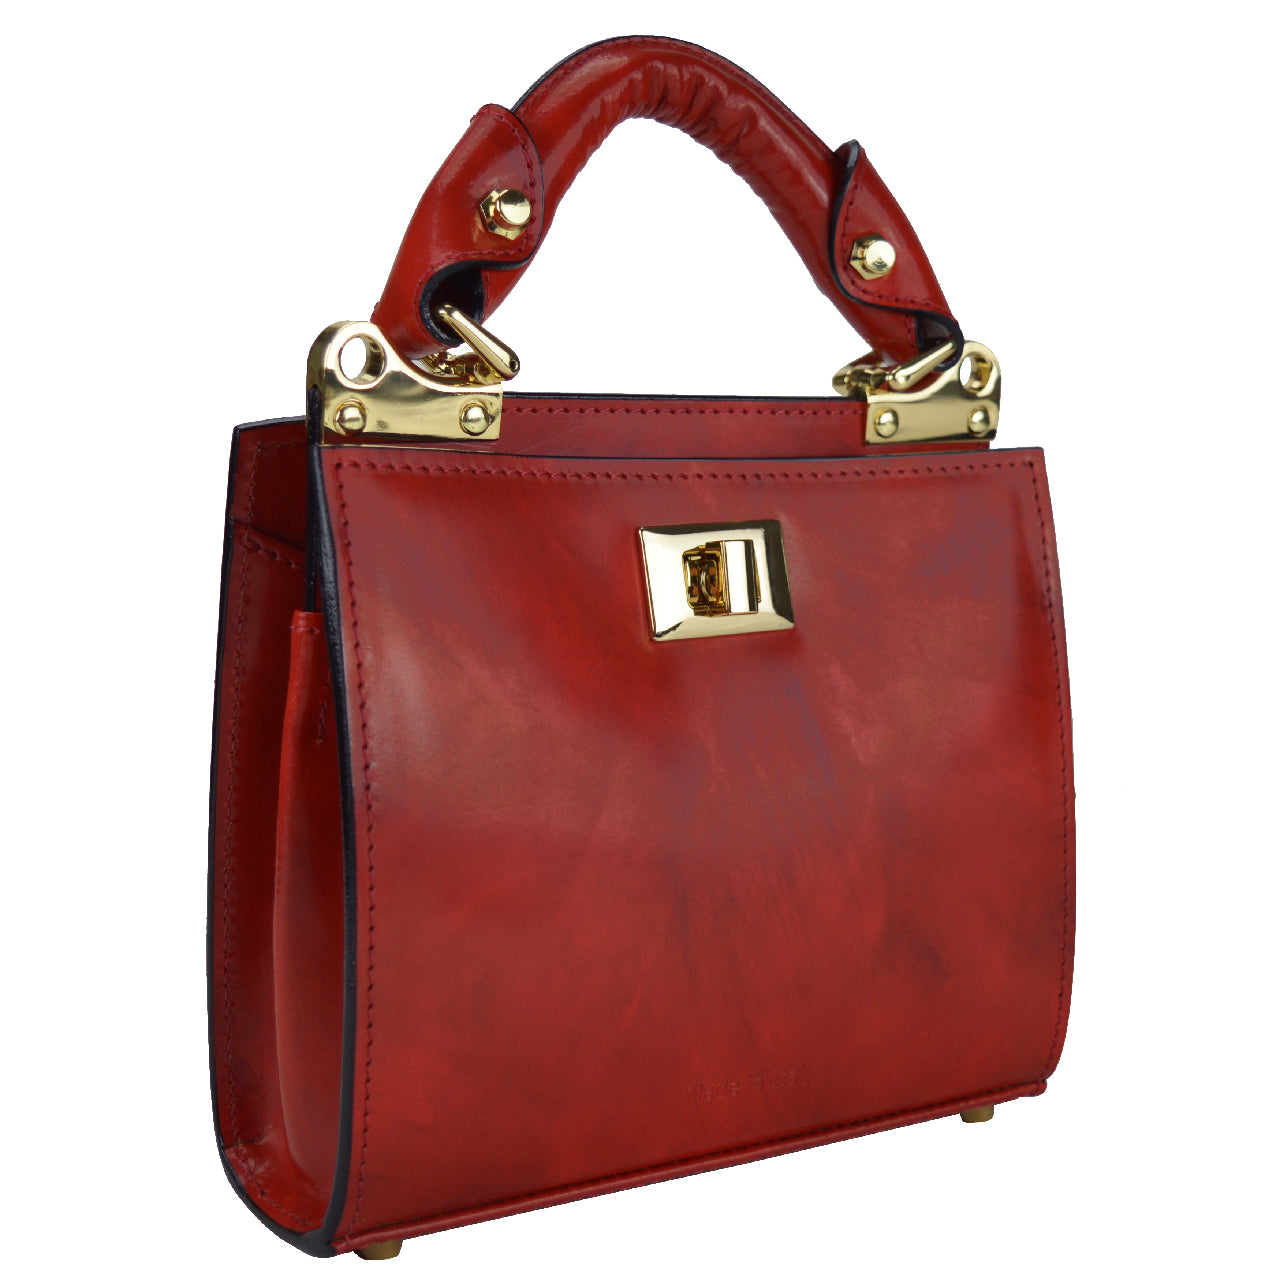 Pratesi Anna Maria Luisa de' Medici Small Lady Bag in genuine Italian leather